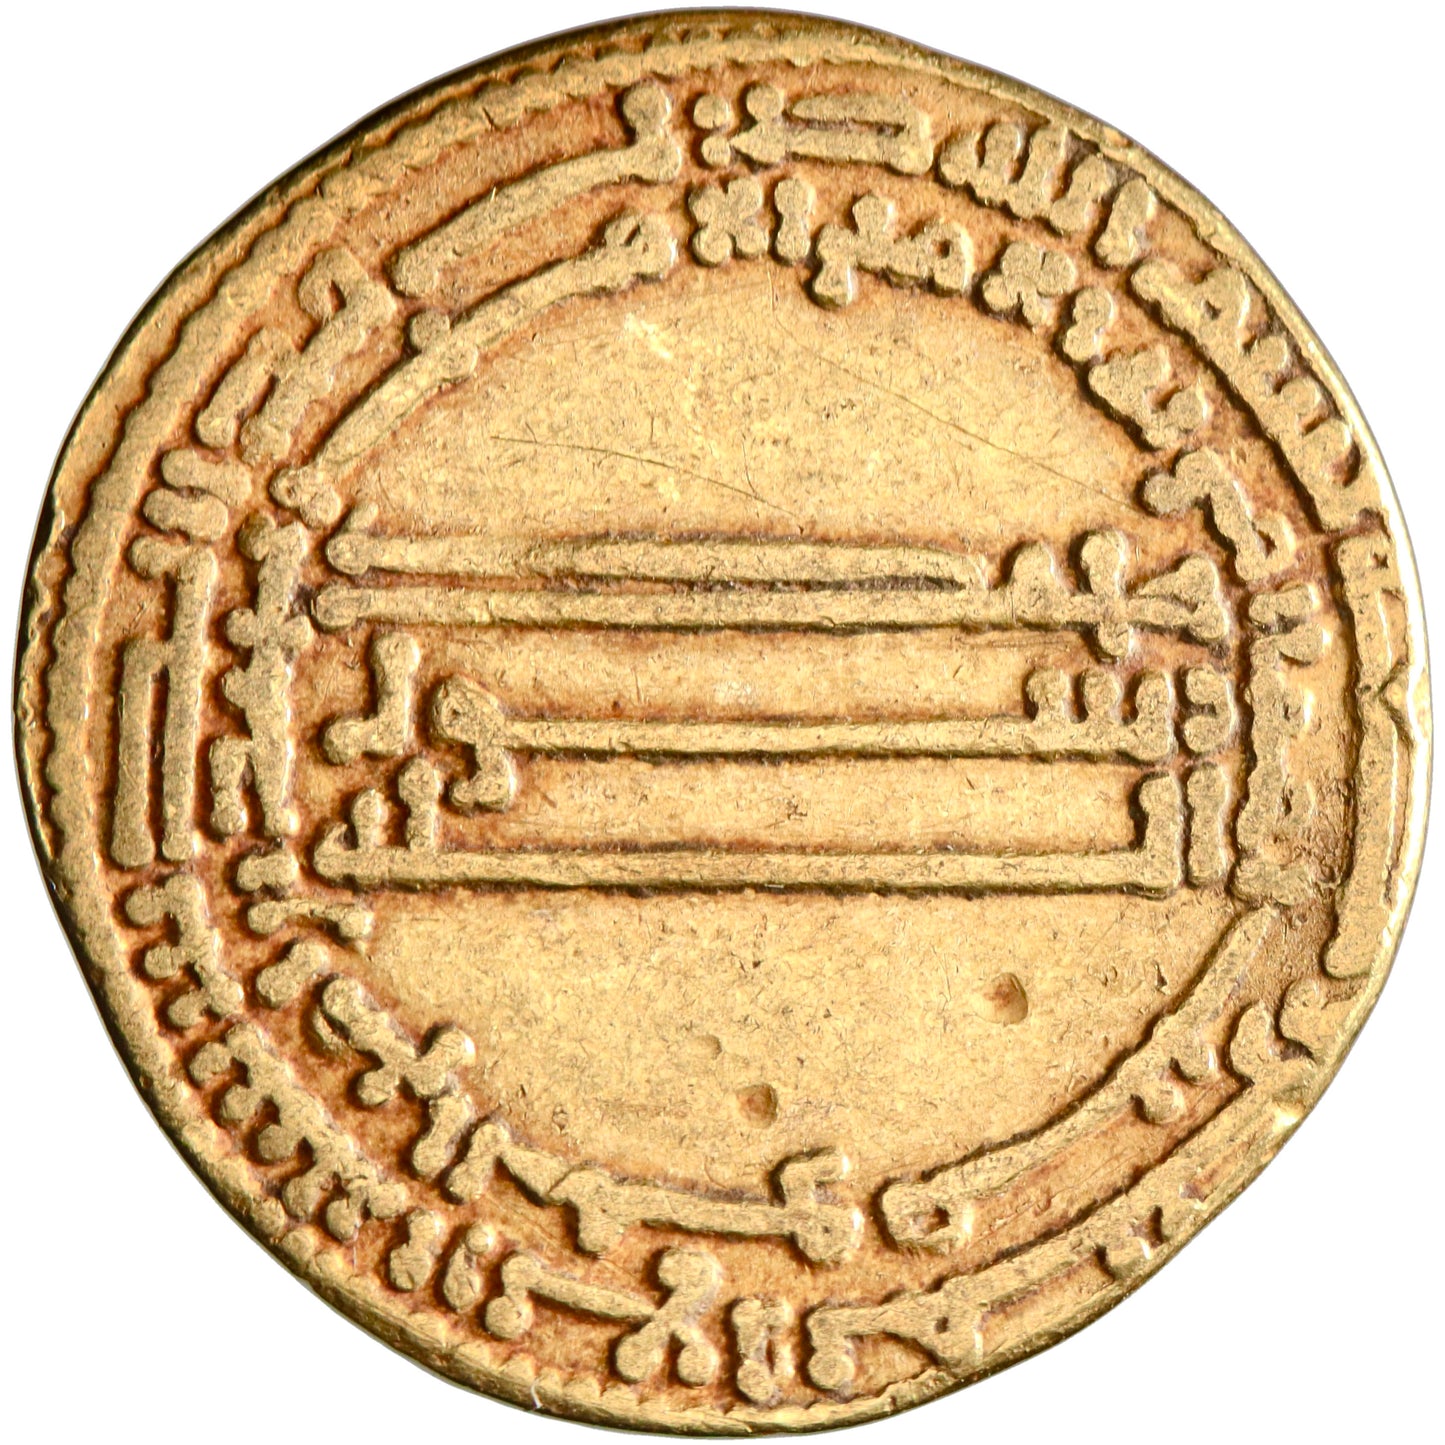 Abbasid, Harun al-Rashid, gold dinar, AH 184, double margin, citing al-Amin